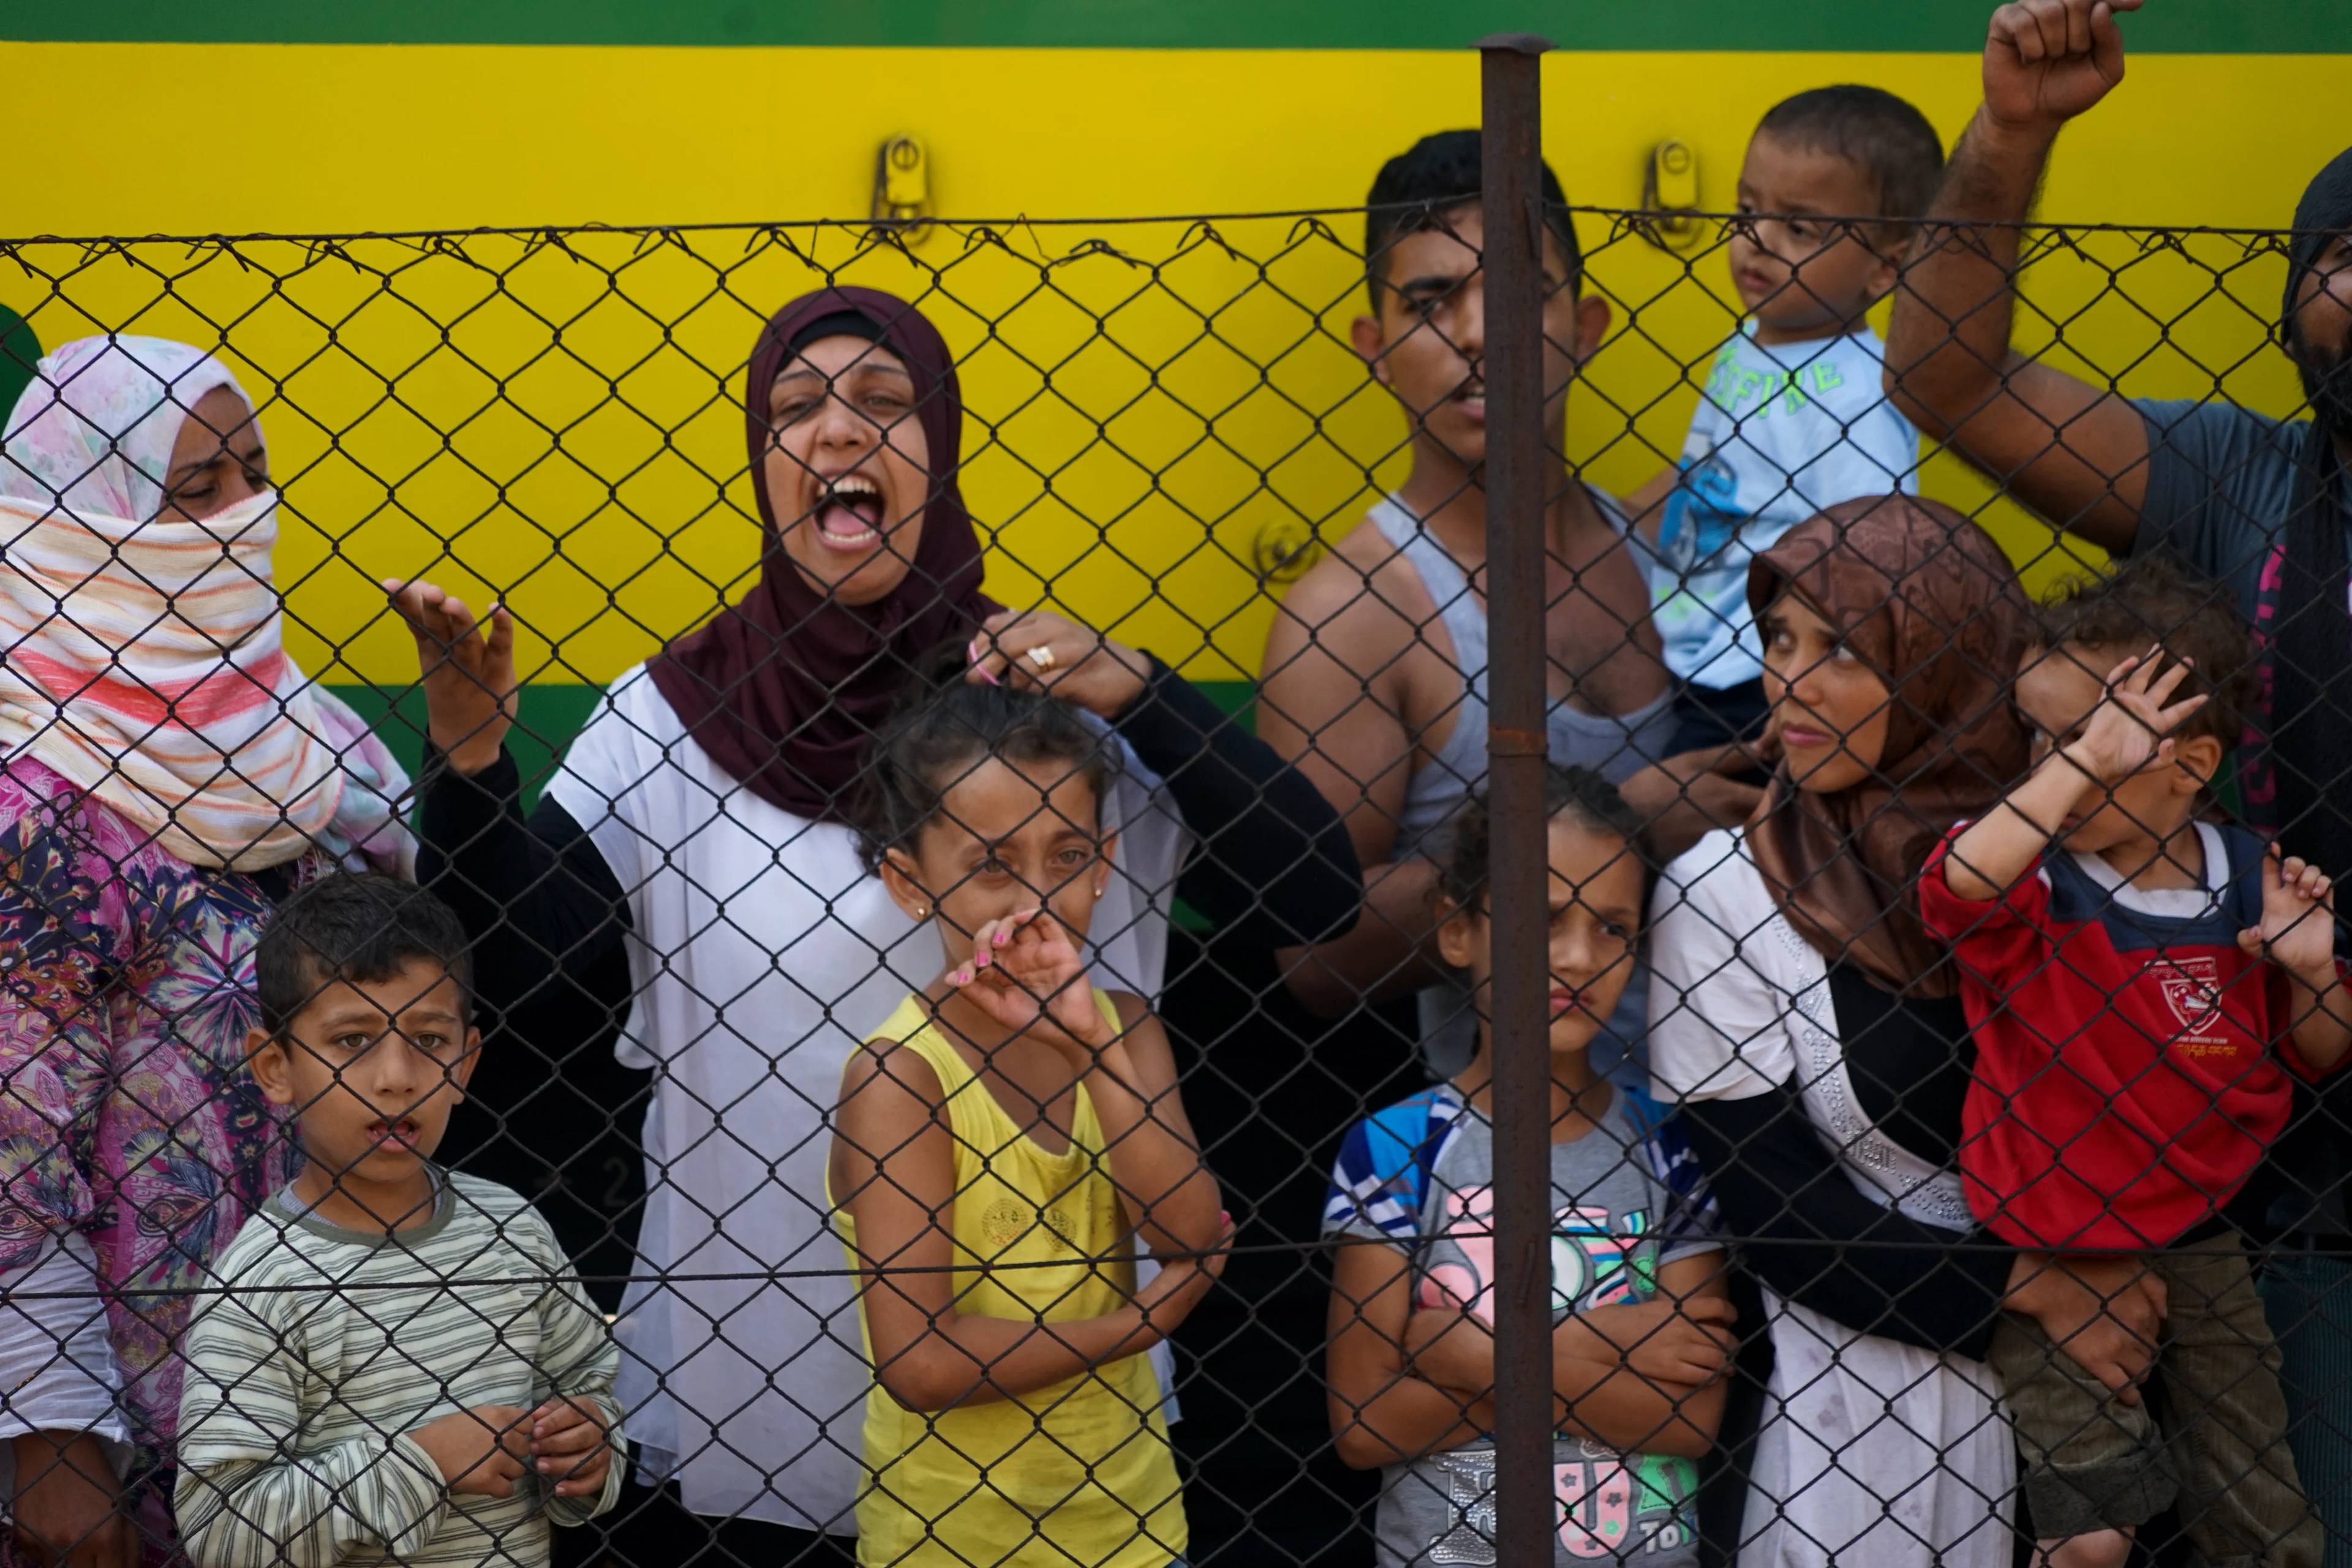 Women and children among Syrian refugees striking at the platform of Budapest Keleti railway station. Refugee crisis. Budapest, Hungary, Central Europe, 4 September 2015.